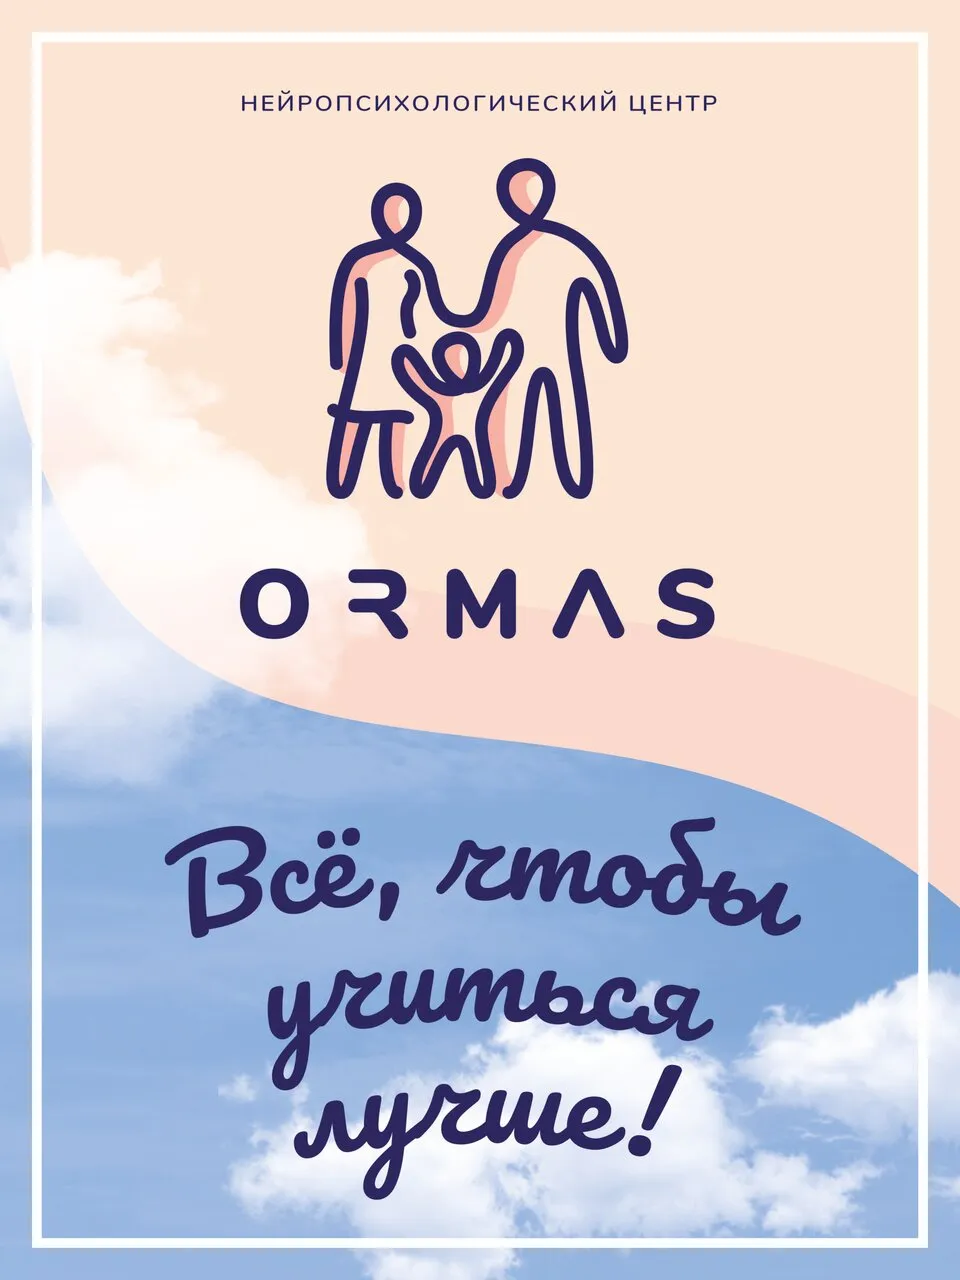 Центр ORMAS (ОРМАС)